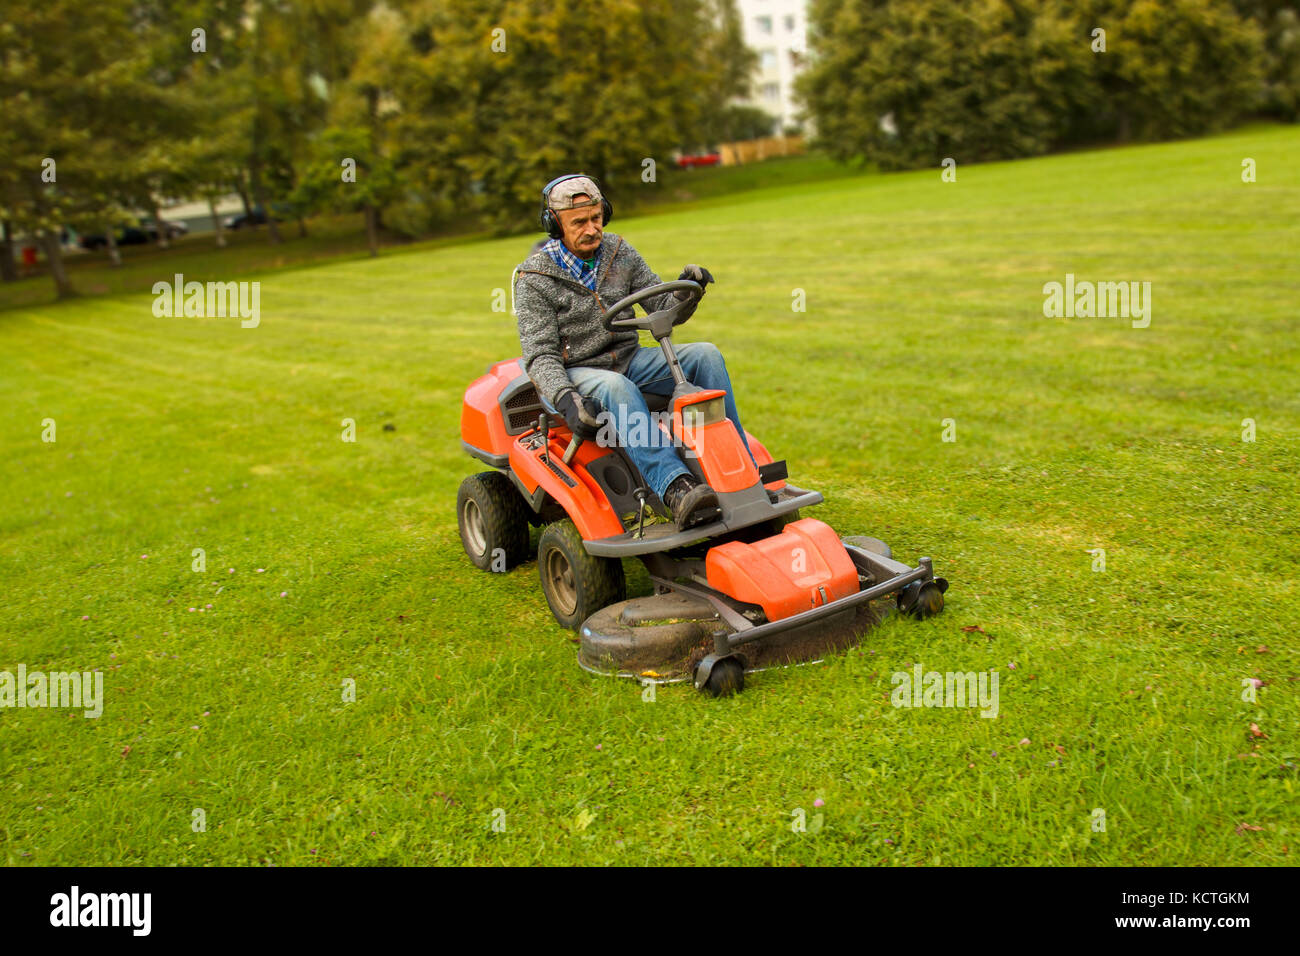 man riding lawn mower Stock Photo